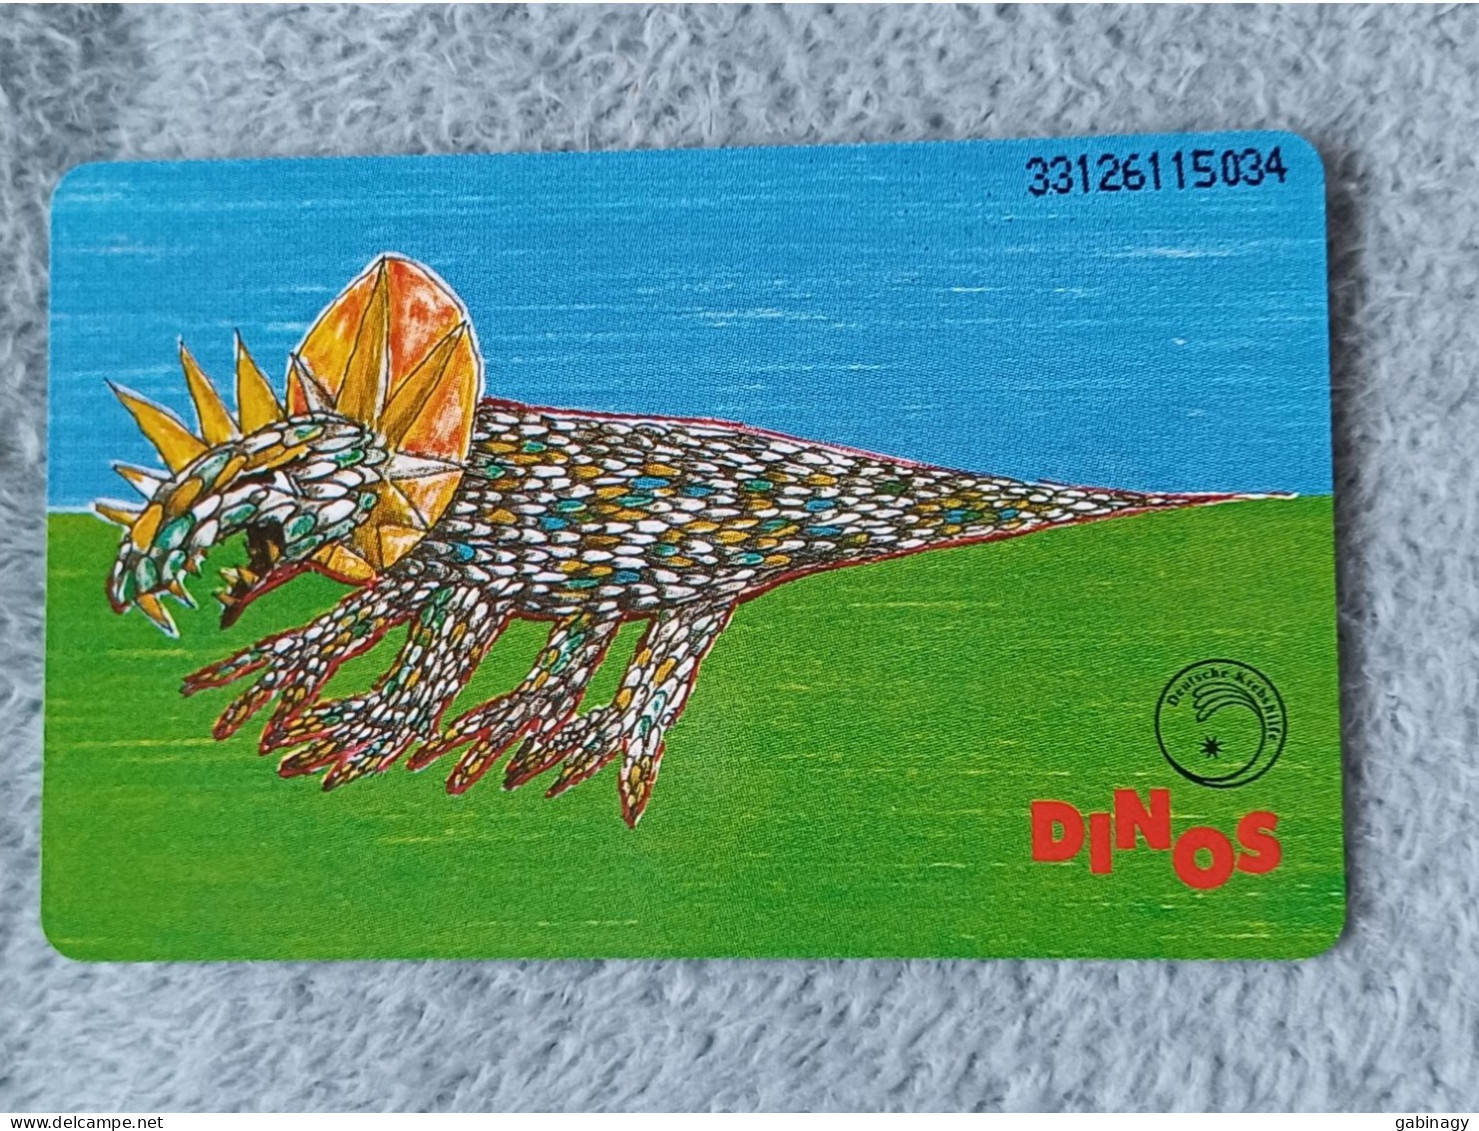 GERMANY-1020 - O 0528D 93 - Deutsche Krebshilfe - Kinder Malen Dinosaurier 4 - DINOAURS - 5.000ex. - K-Serie : Serie Clienti